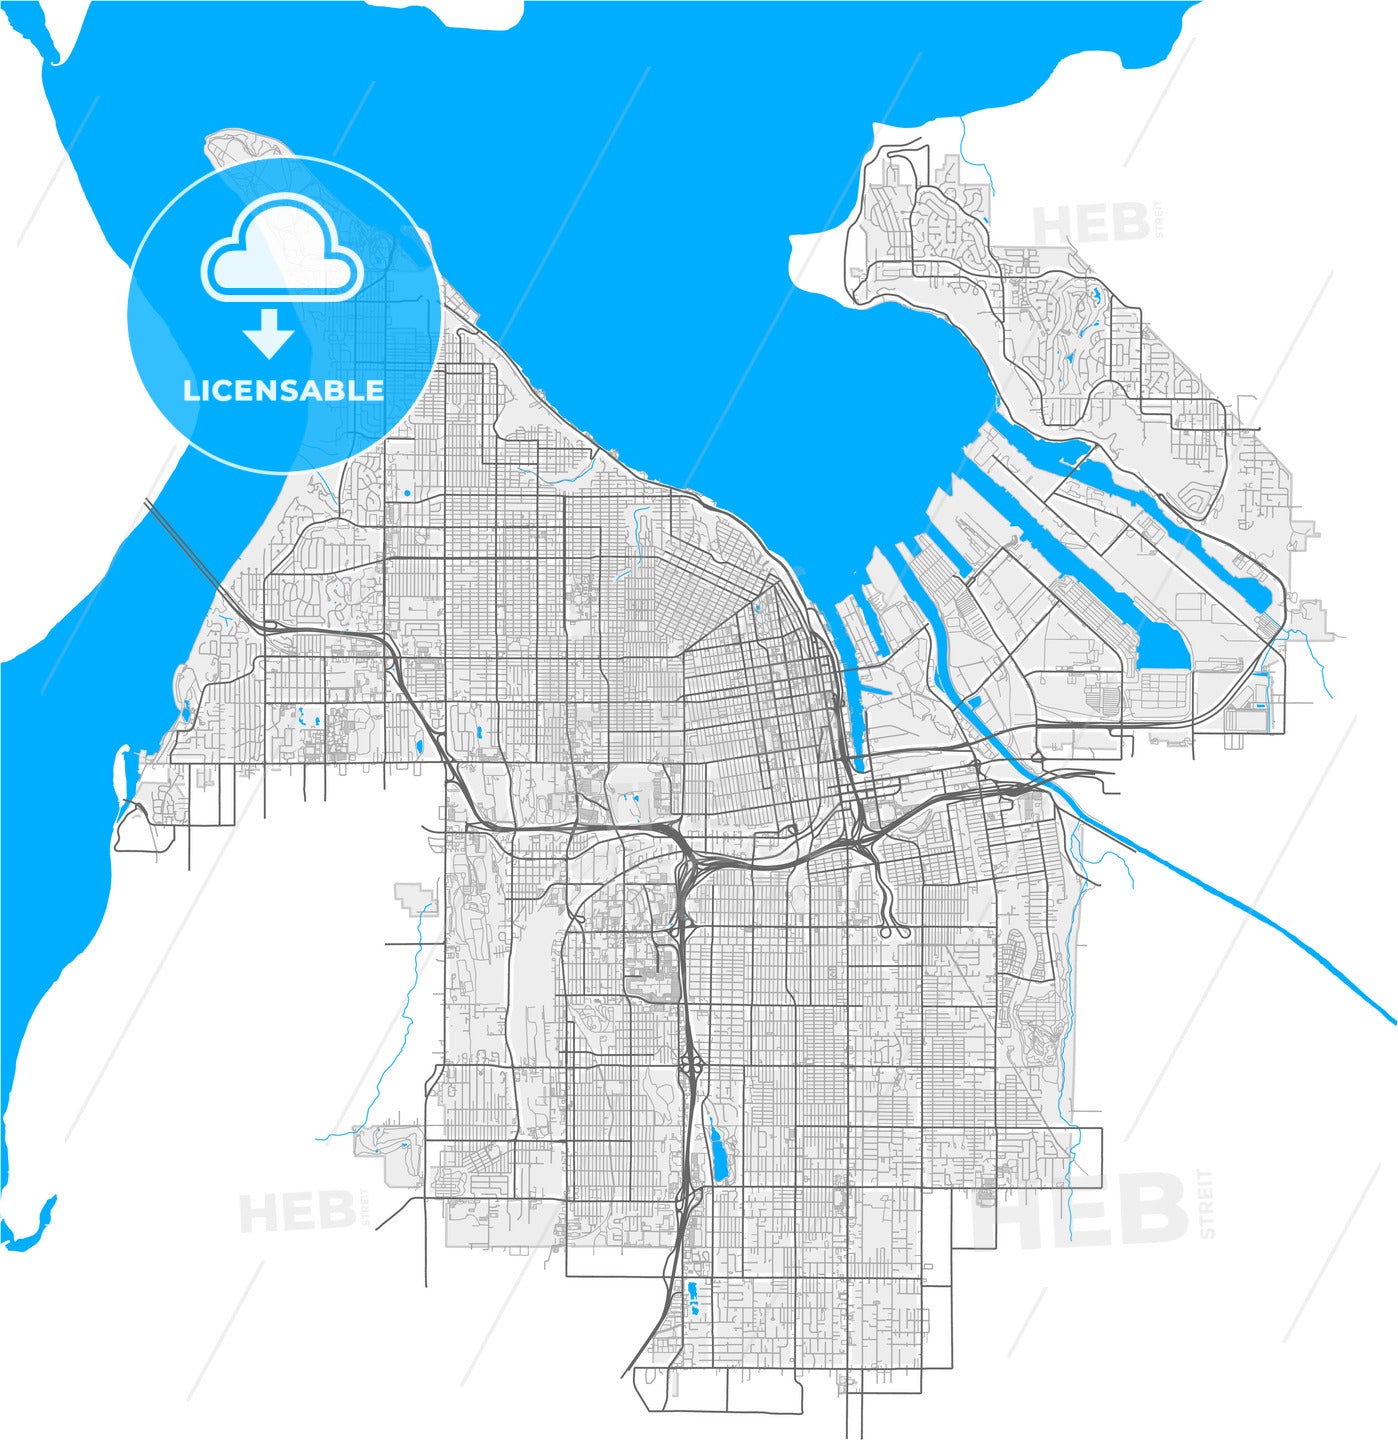 Tacoma, Washington, United States, high quality vector map